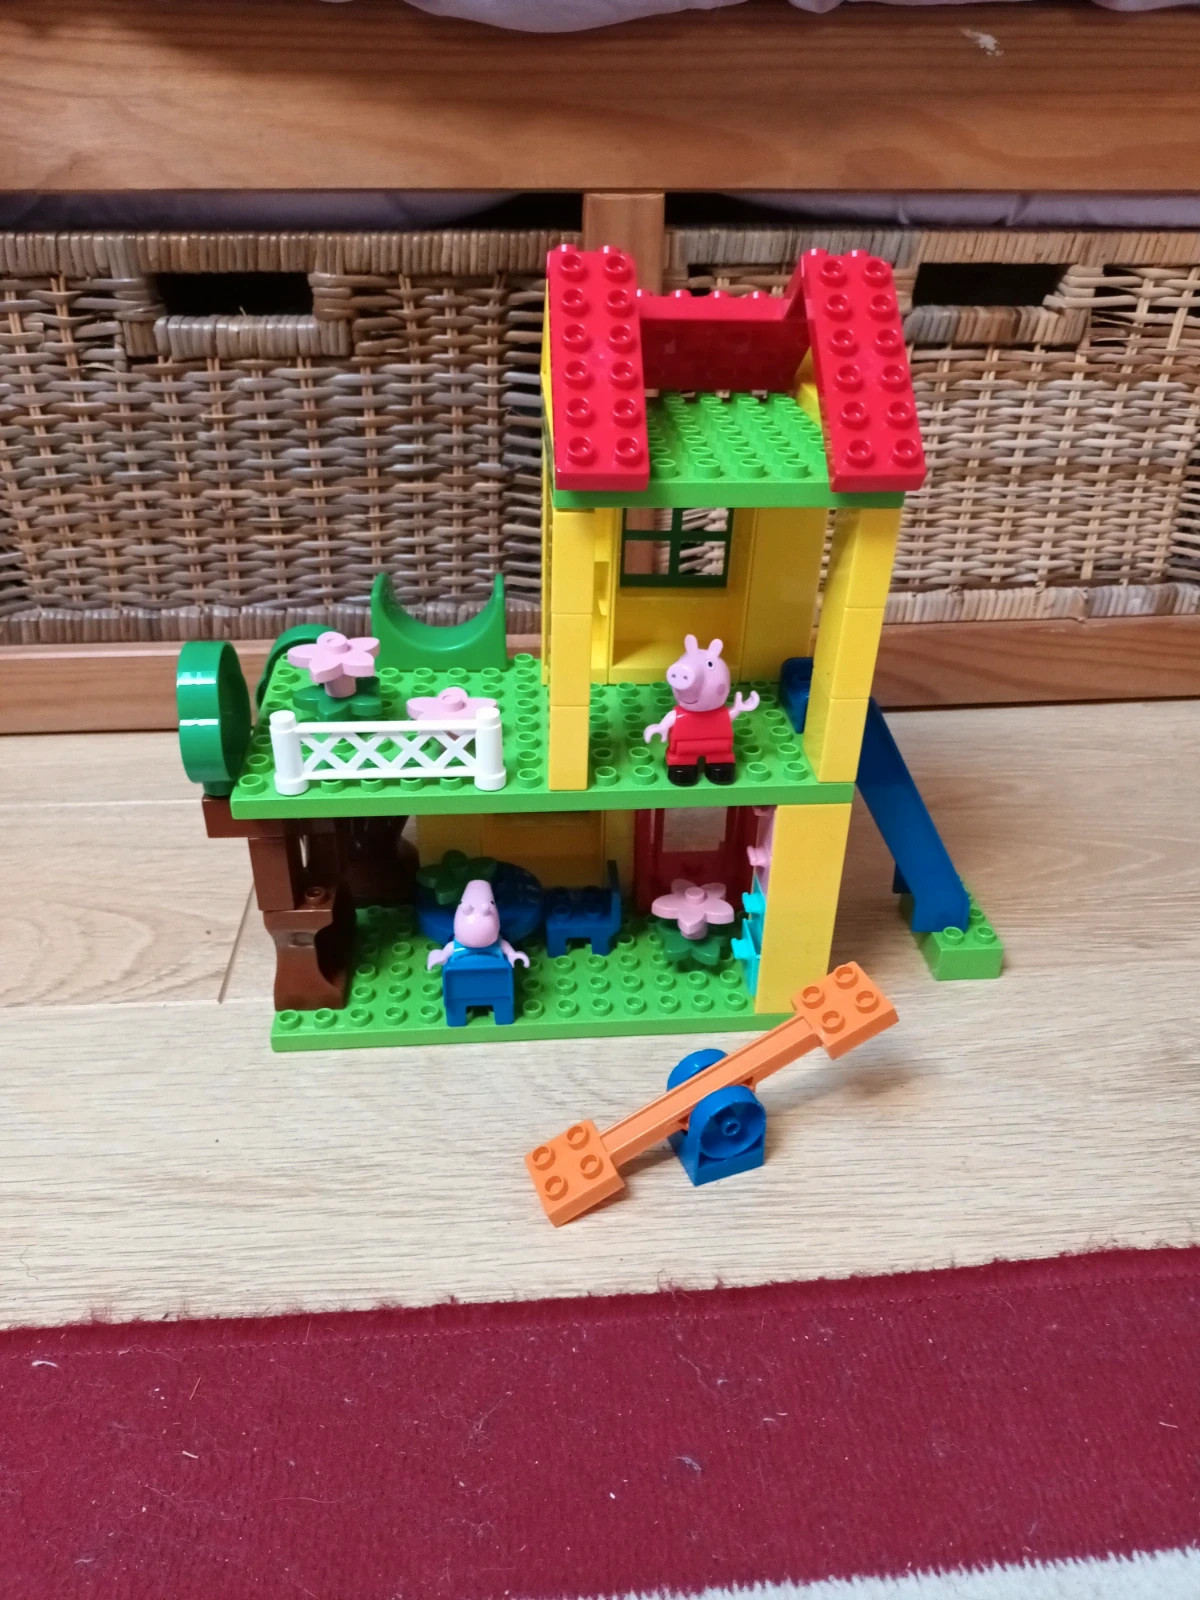 BIG PlayBIG Bloxx La Maison de jeu de Peppa Pig - Lego - Achat